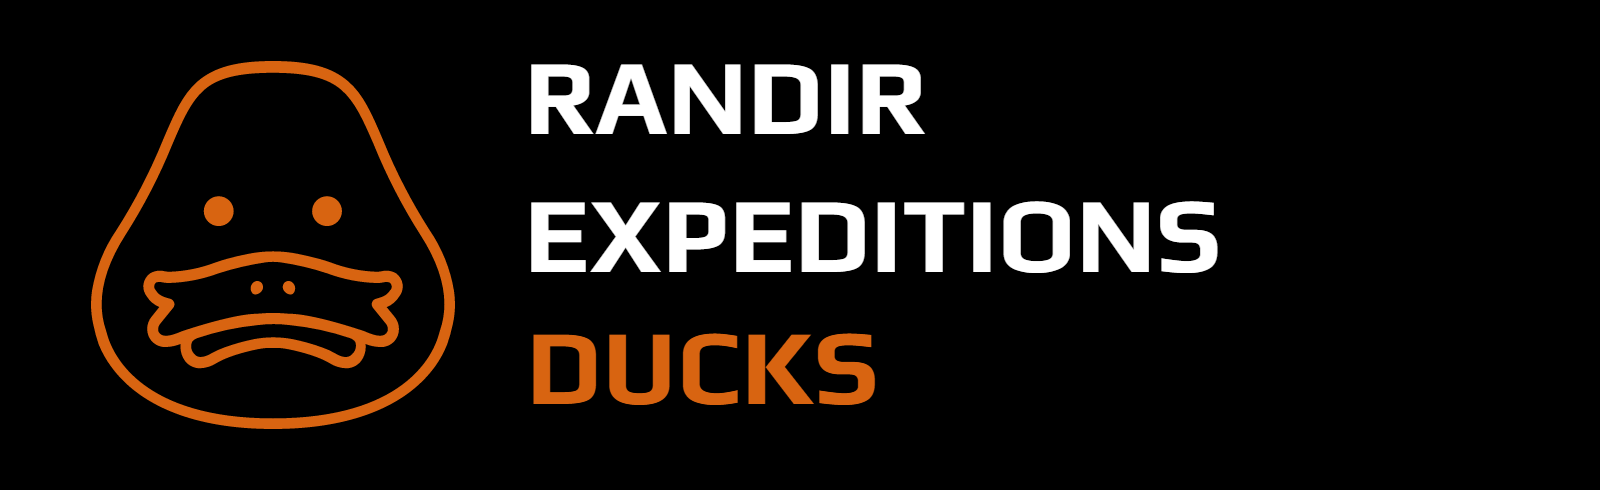 Randir Expeditions, Ducks